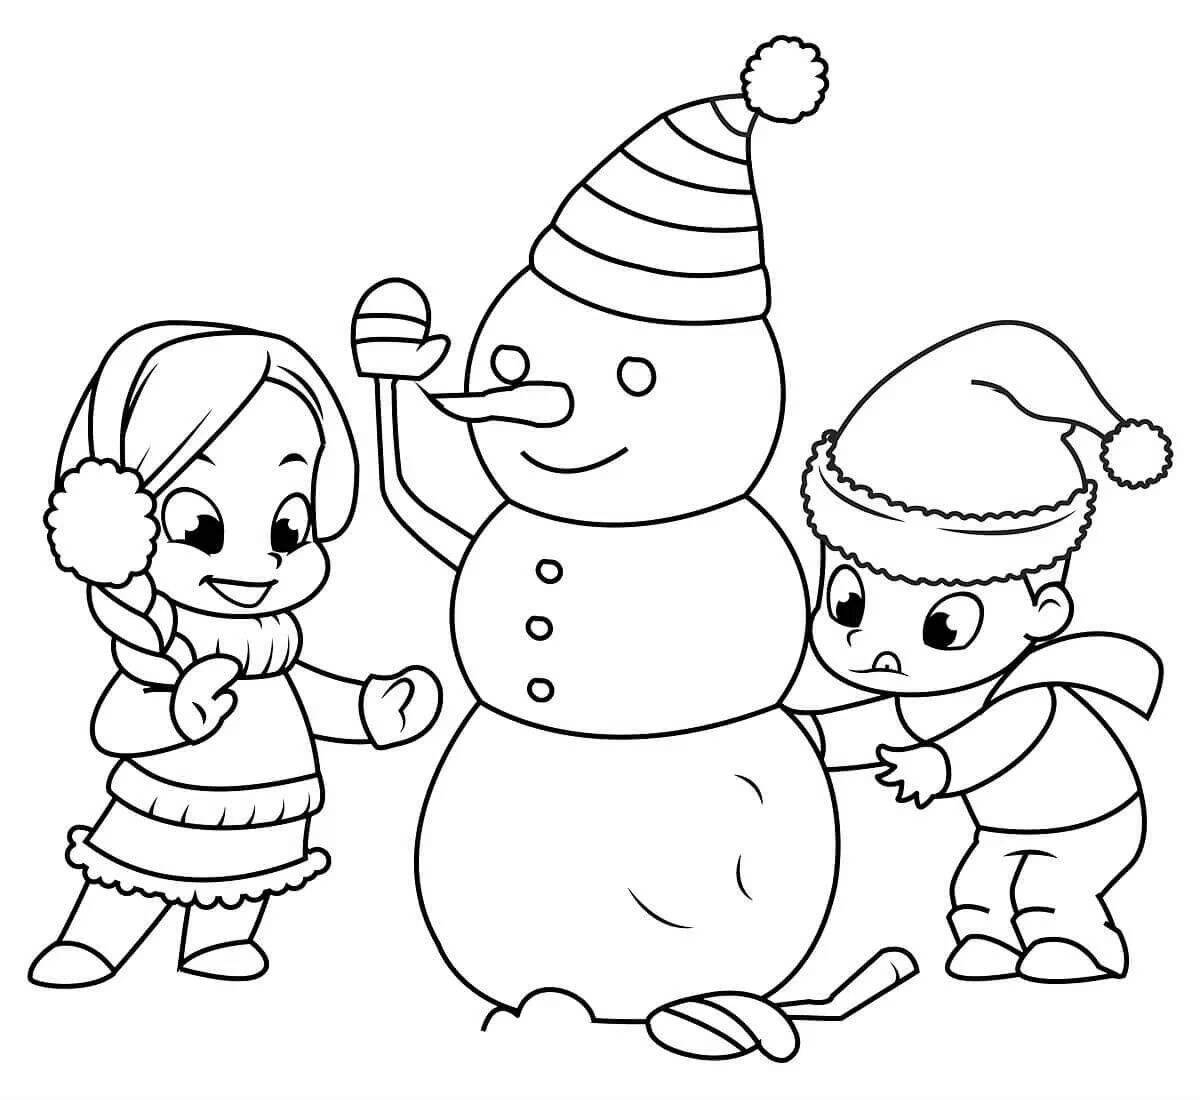 Magic snowman coloring page